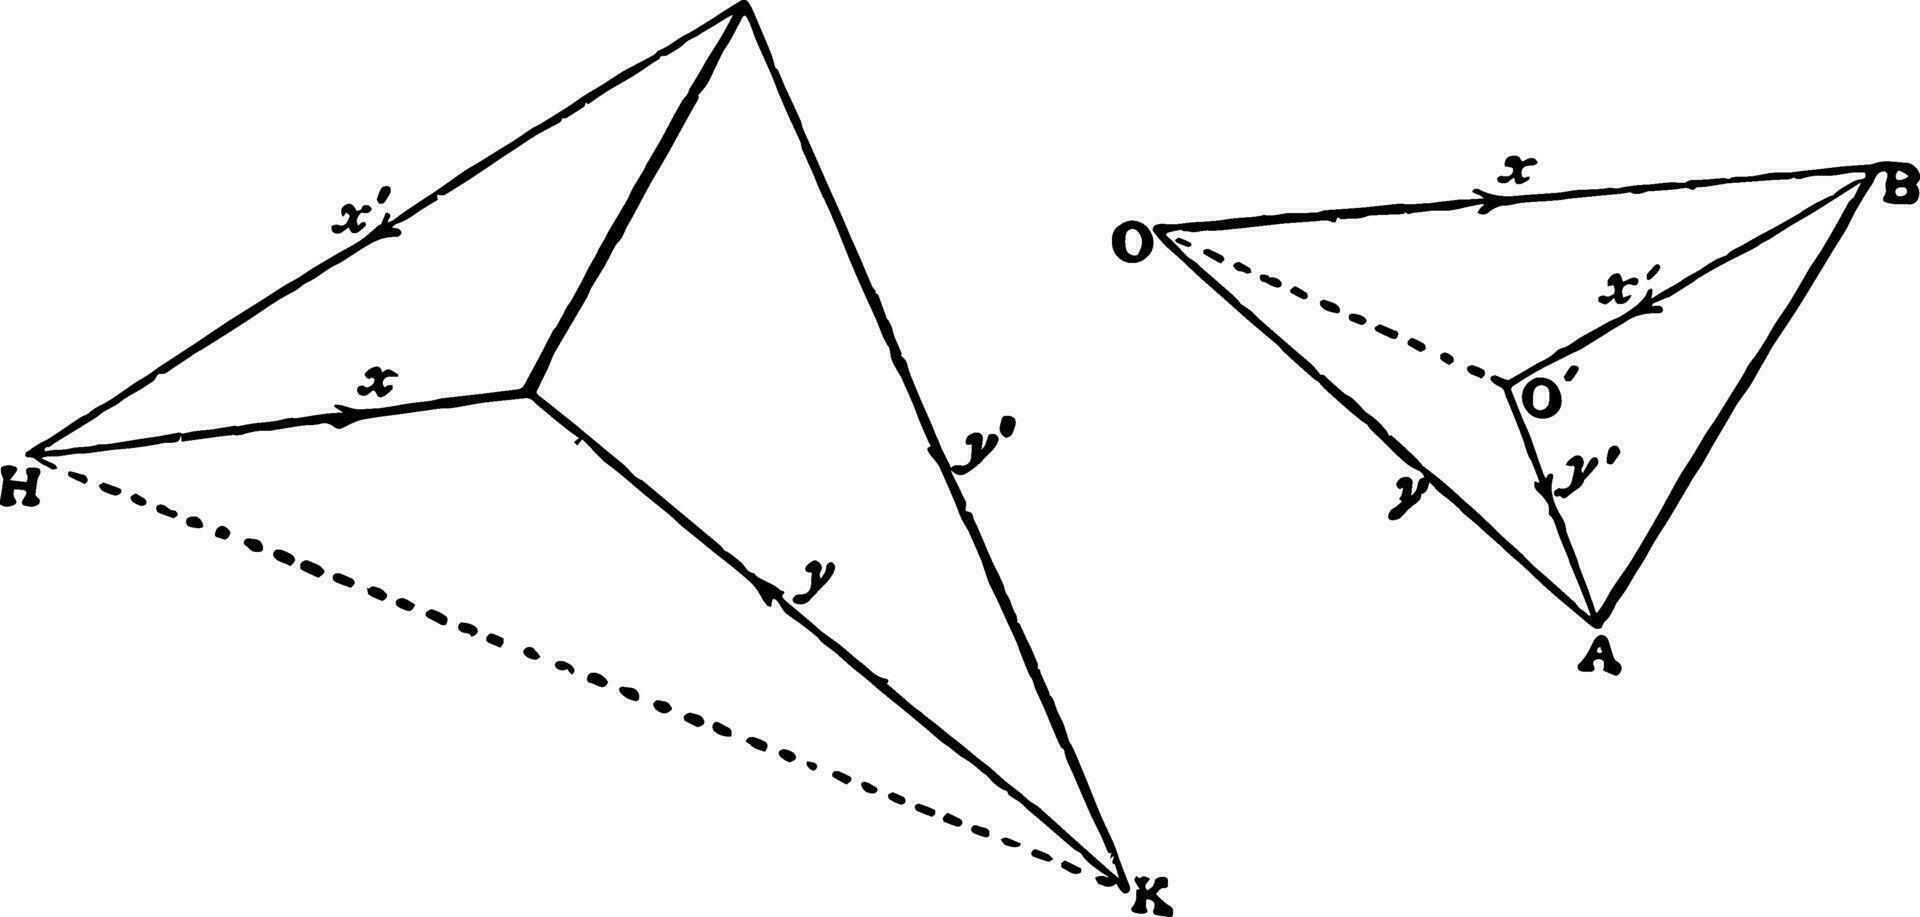 Polyhedron vintage illustration. vector